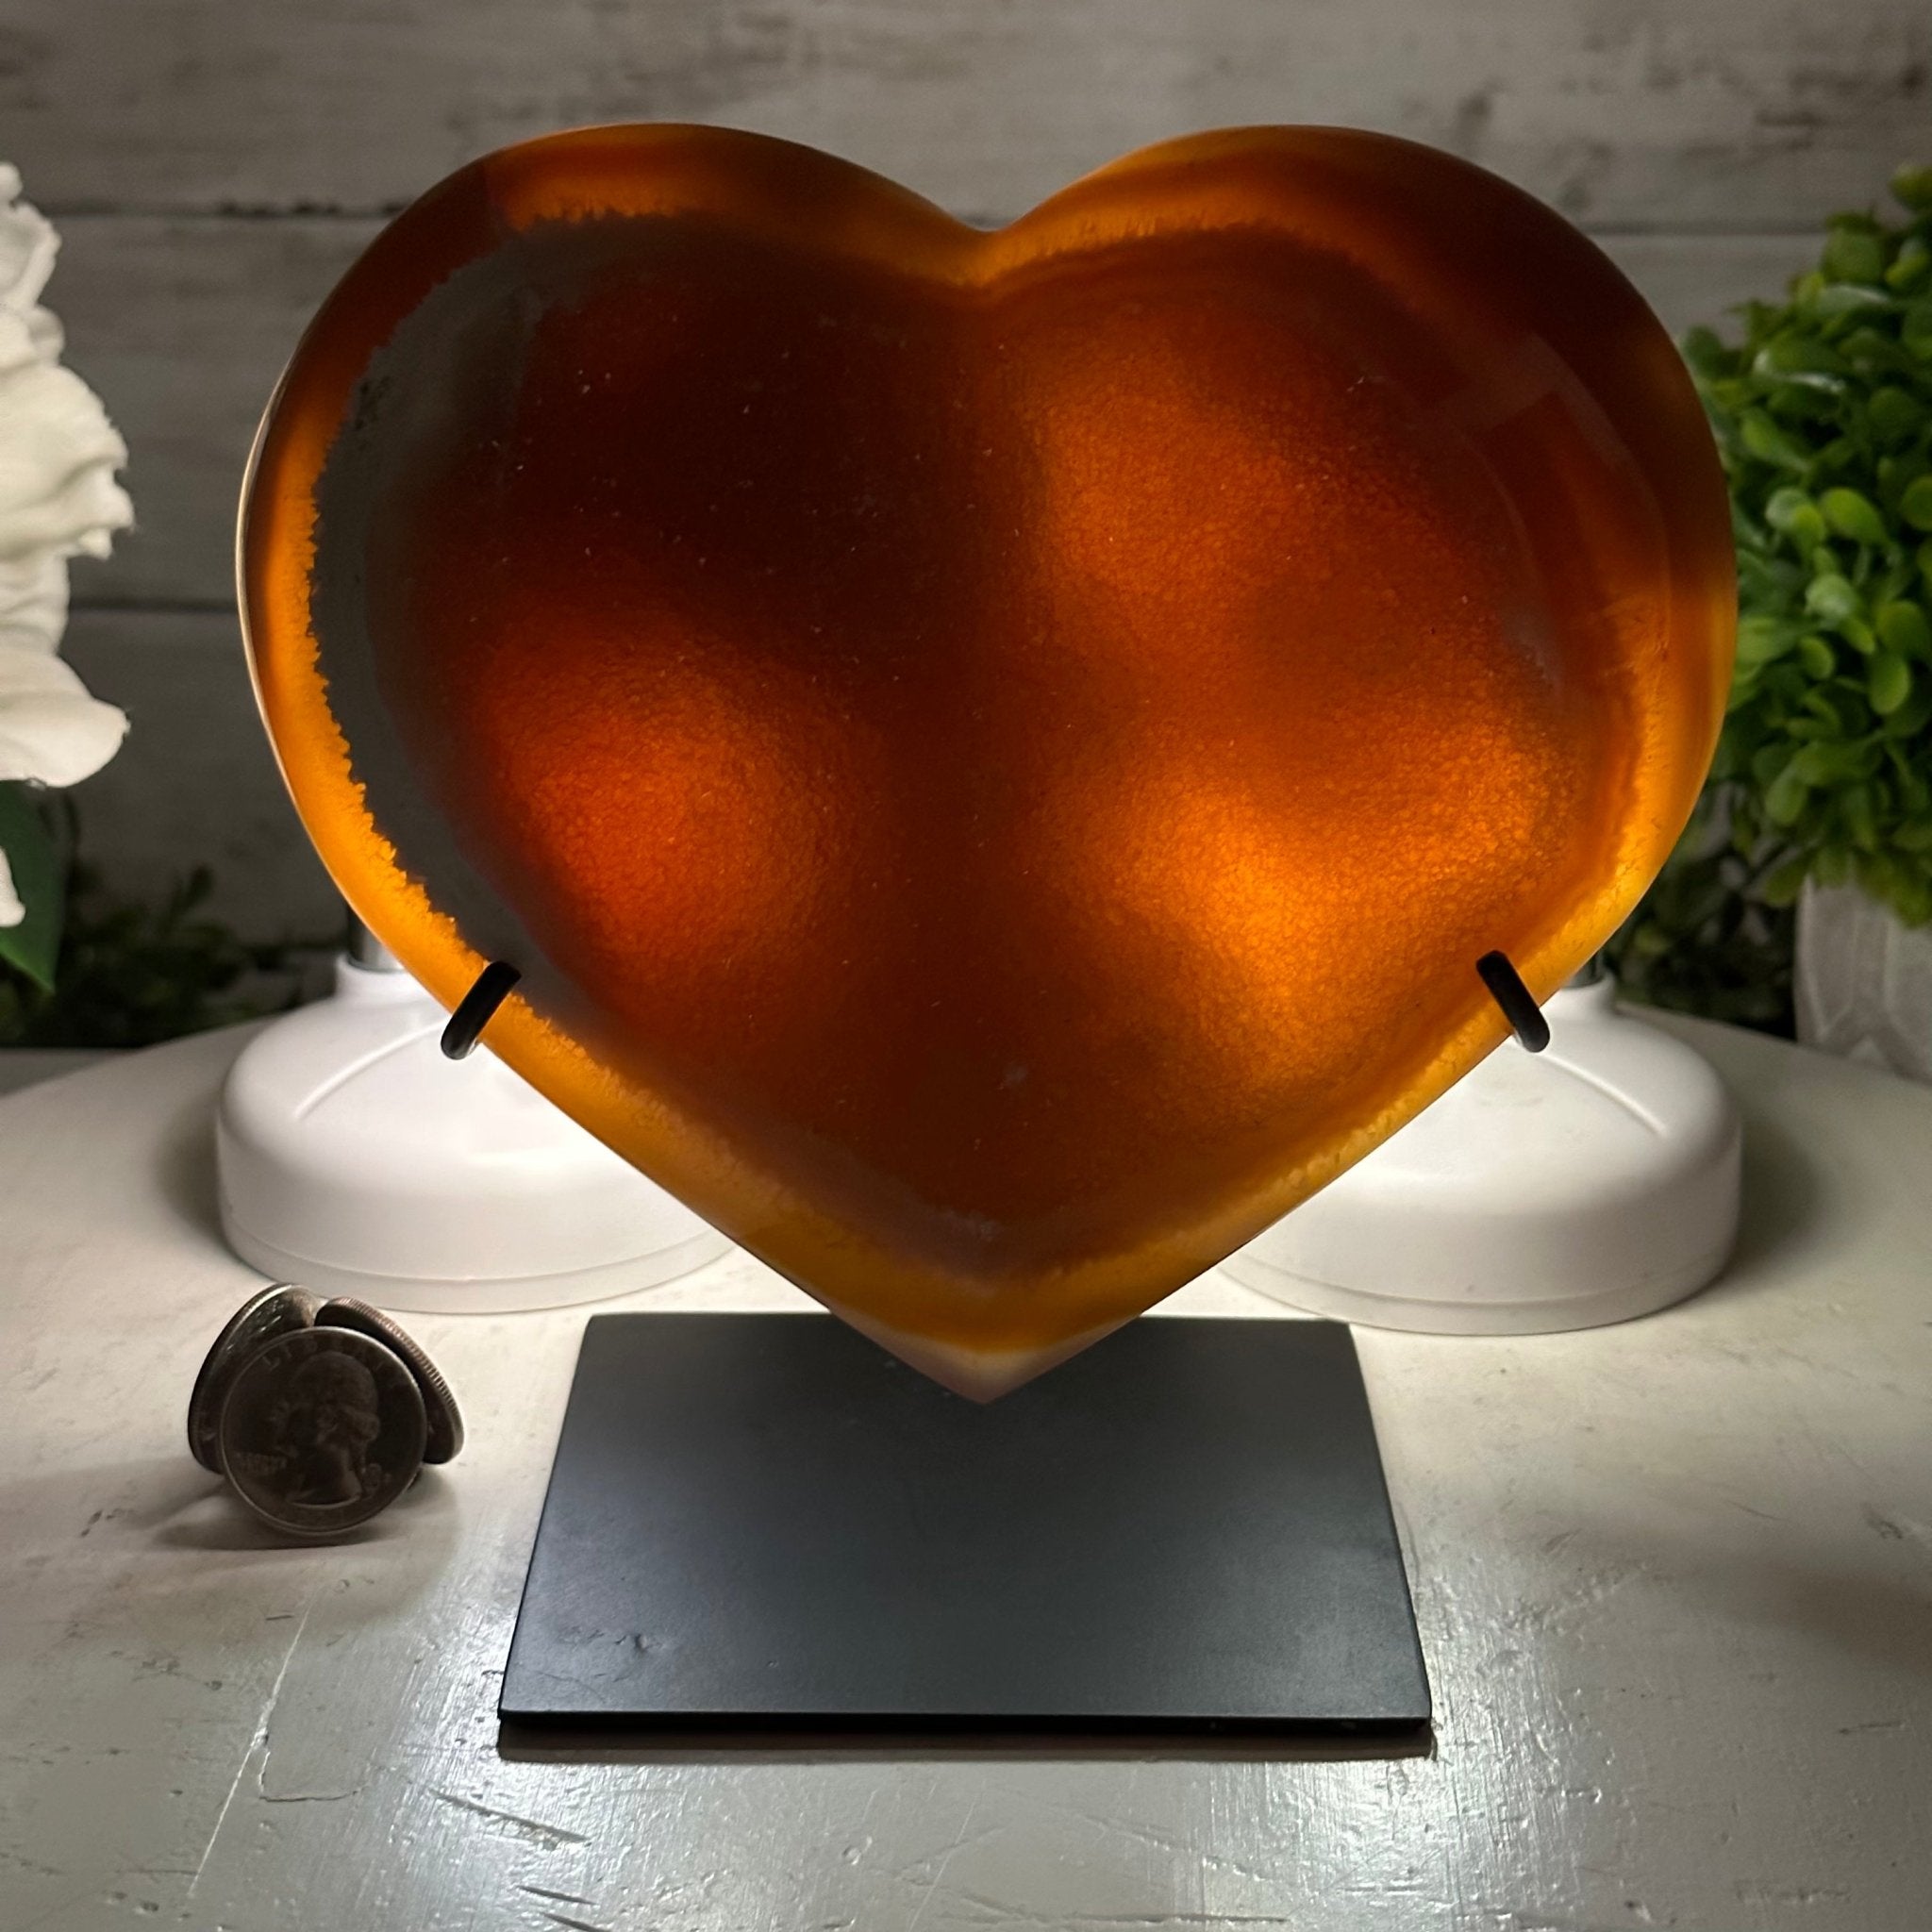 Polished Agate Heart Geode on a Metal Stand, 3.6 lbs & 6.5" Tall, Model #5468-0068 by Brazil Gems - Brazil GemsBrazil GemsPolished Agate Heart Geode on a Metal Stand, 3.6 lbs & 6.5" Tall, Model #5468-0068 by Brazil GemsHearts5468-0068